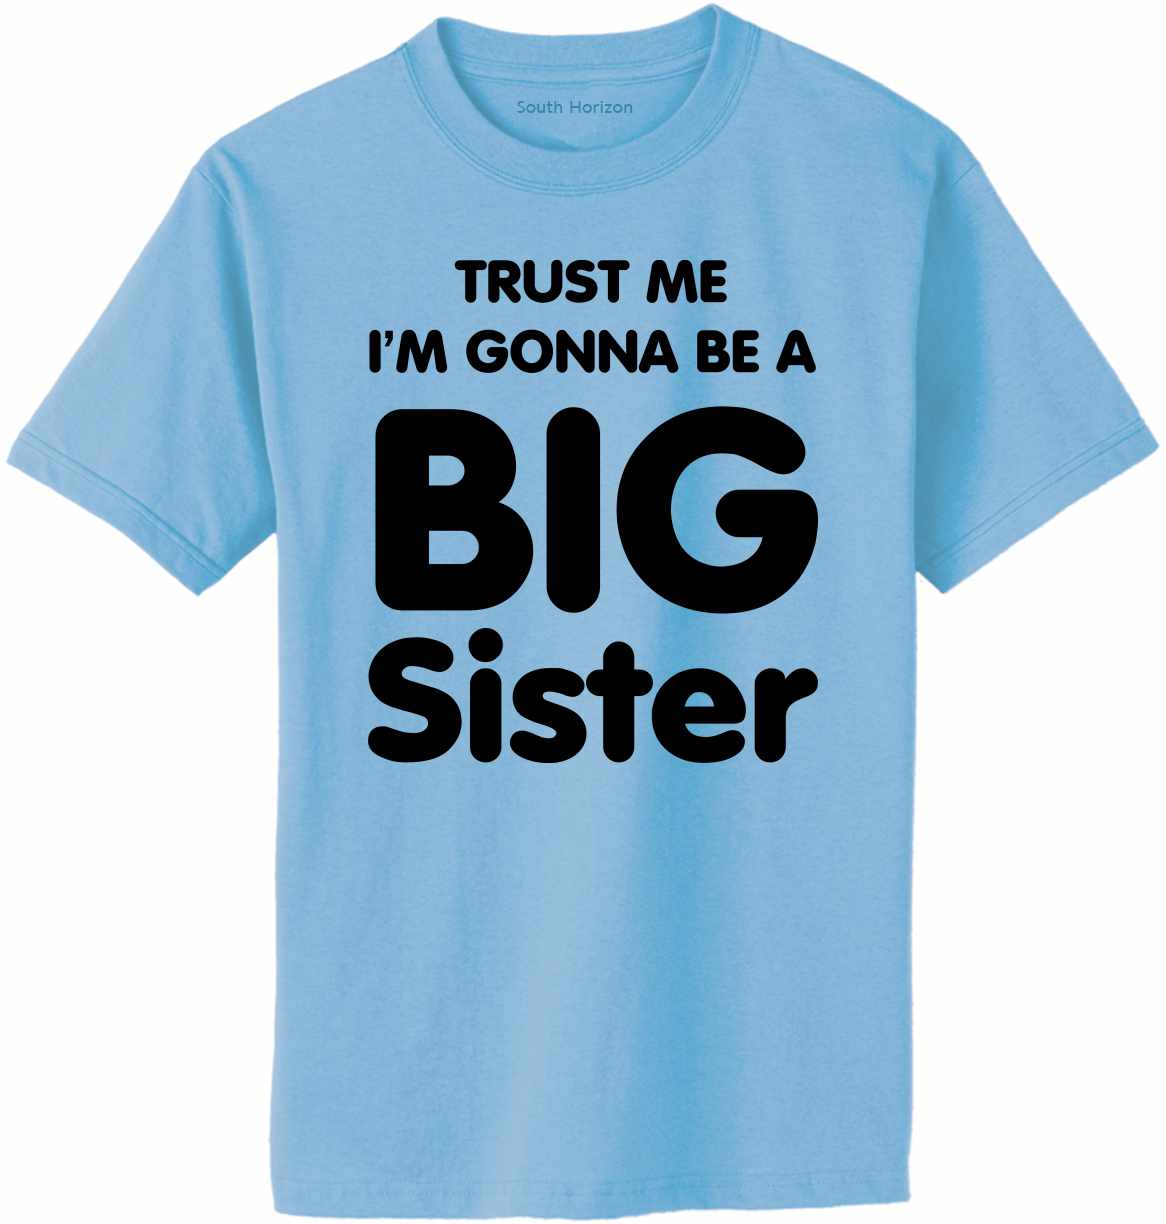 Trust Me I'm Gonna be a Big Sister Adult T-Shirt